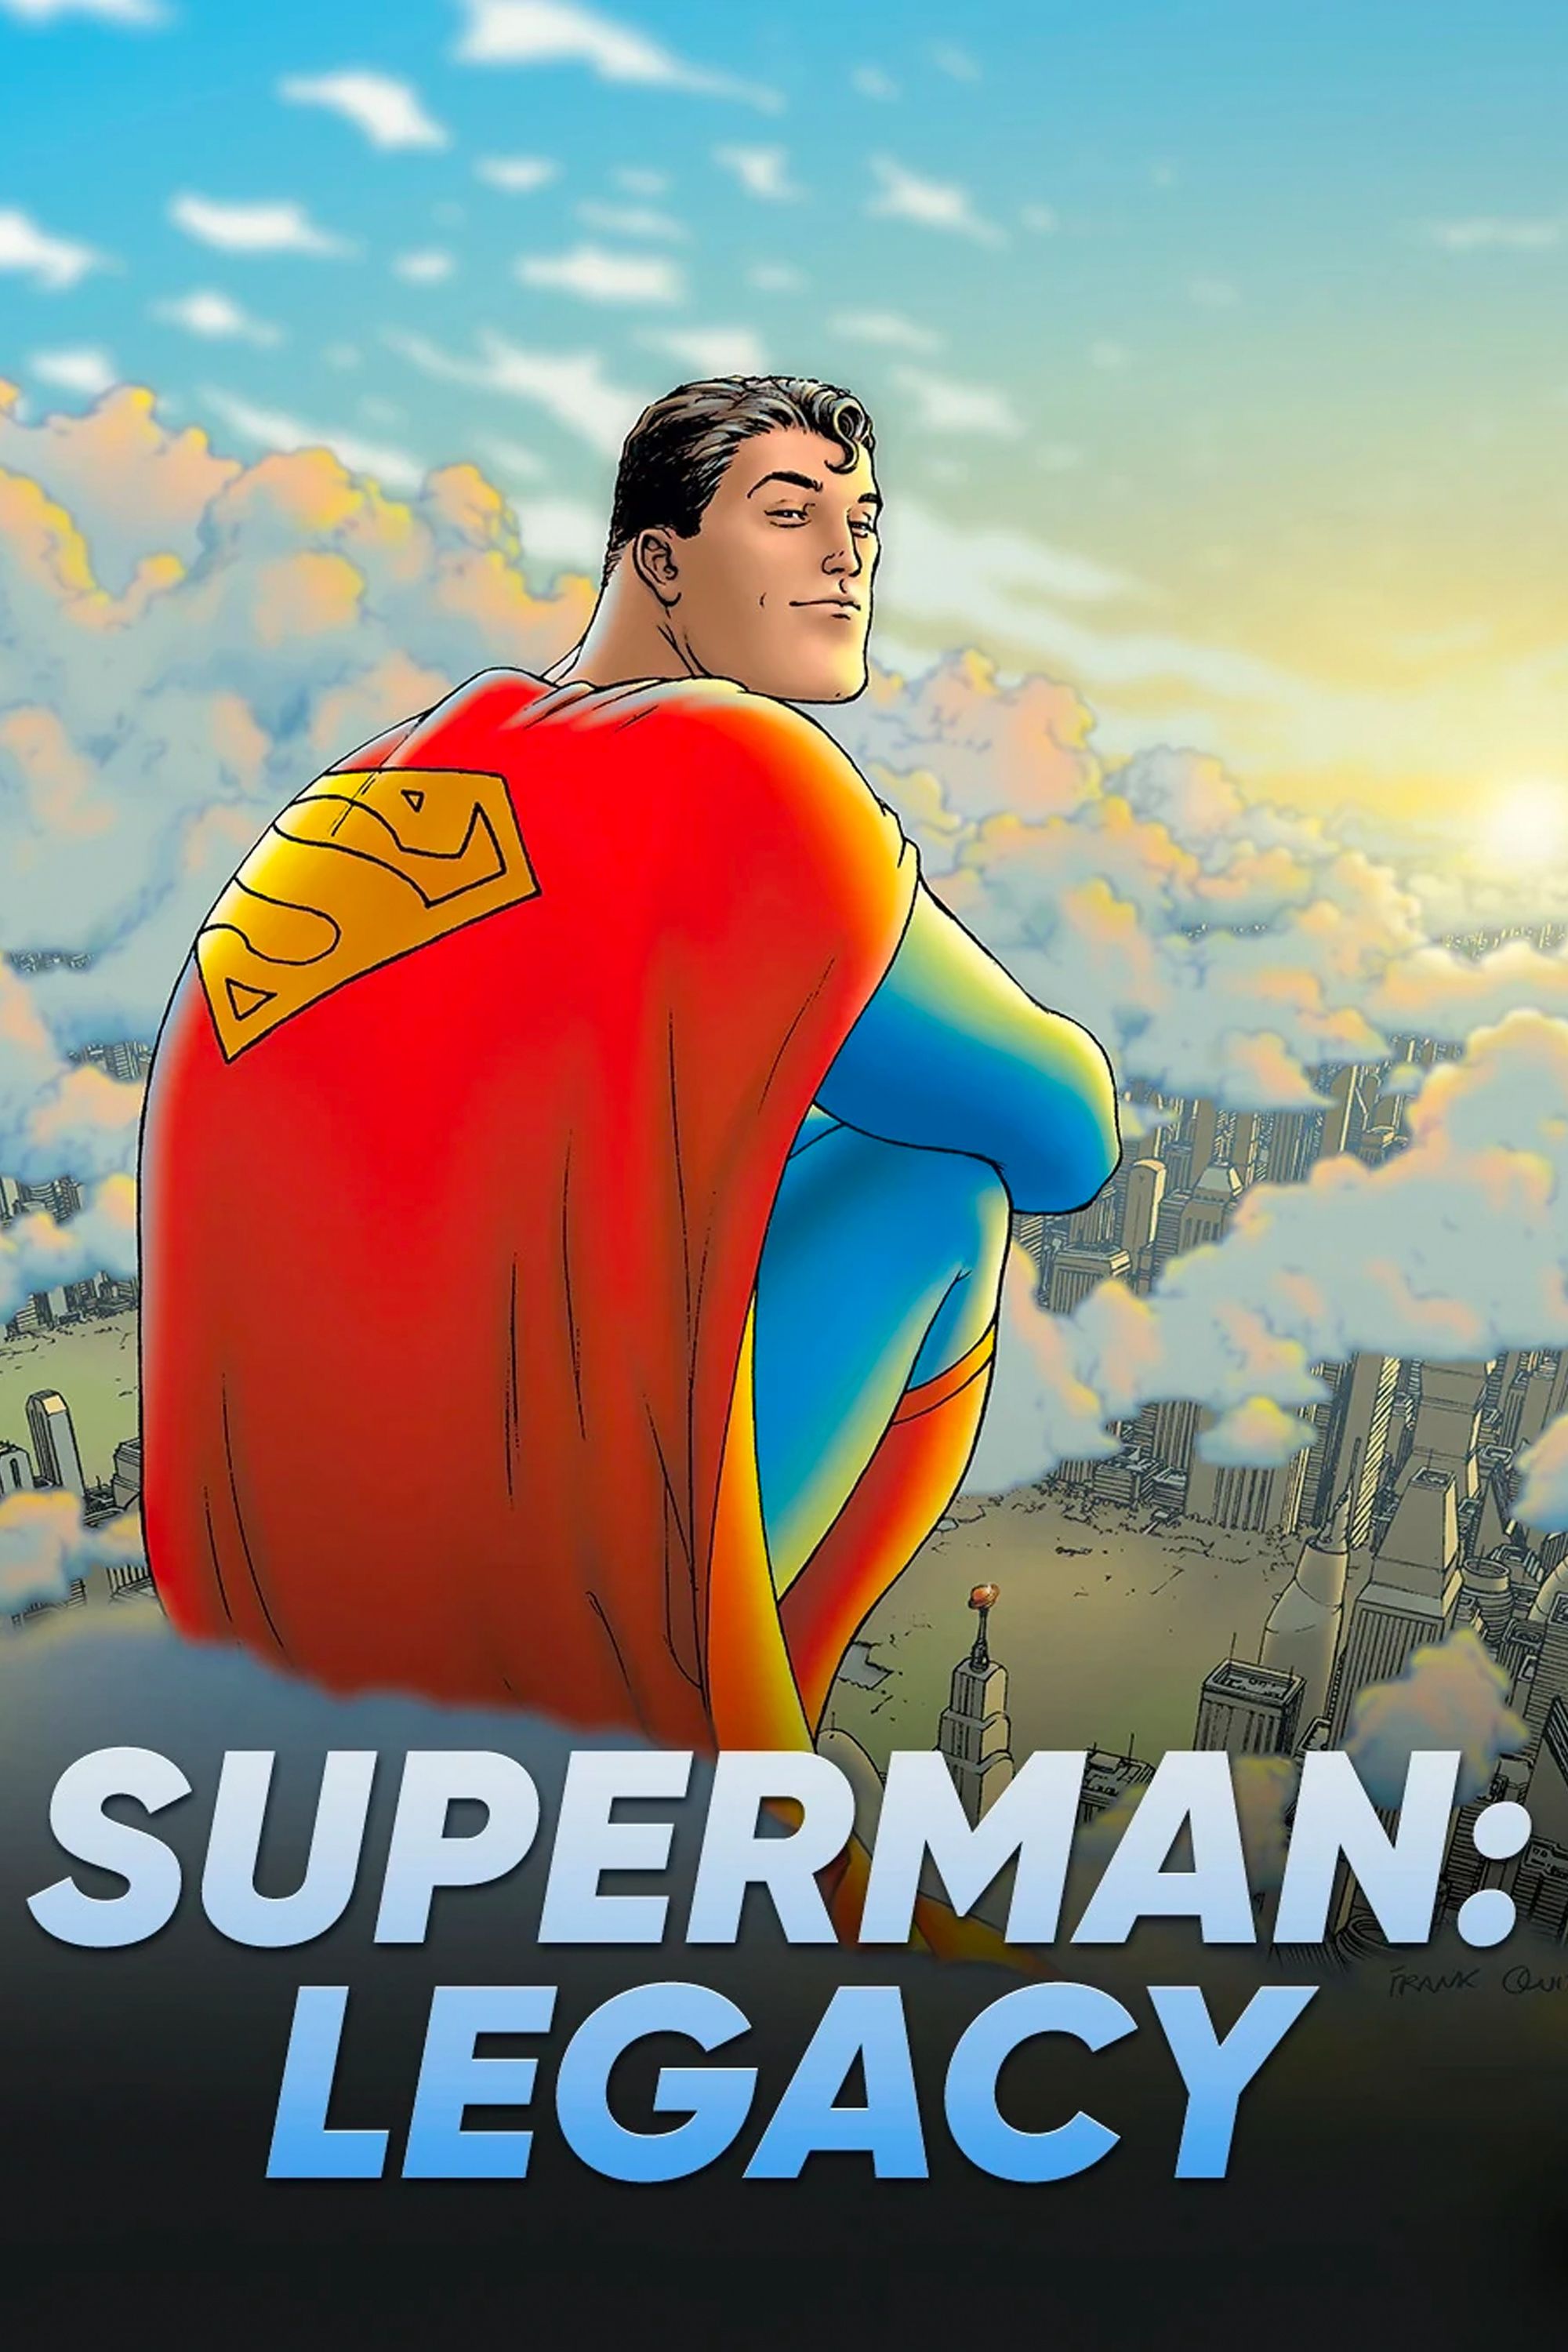 Superman legacy comic book cover